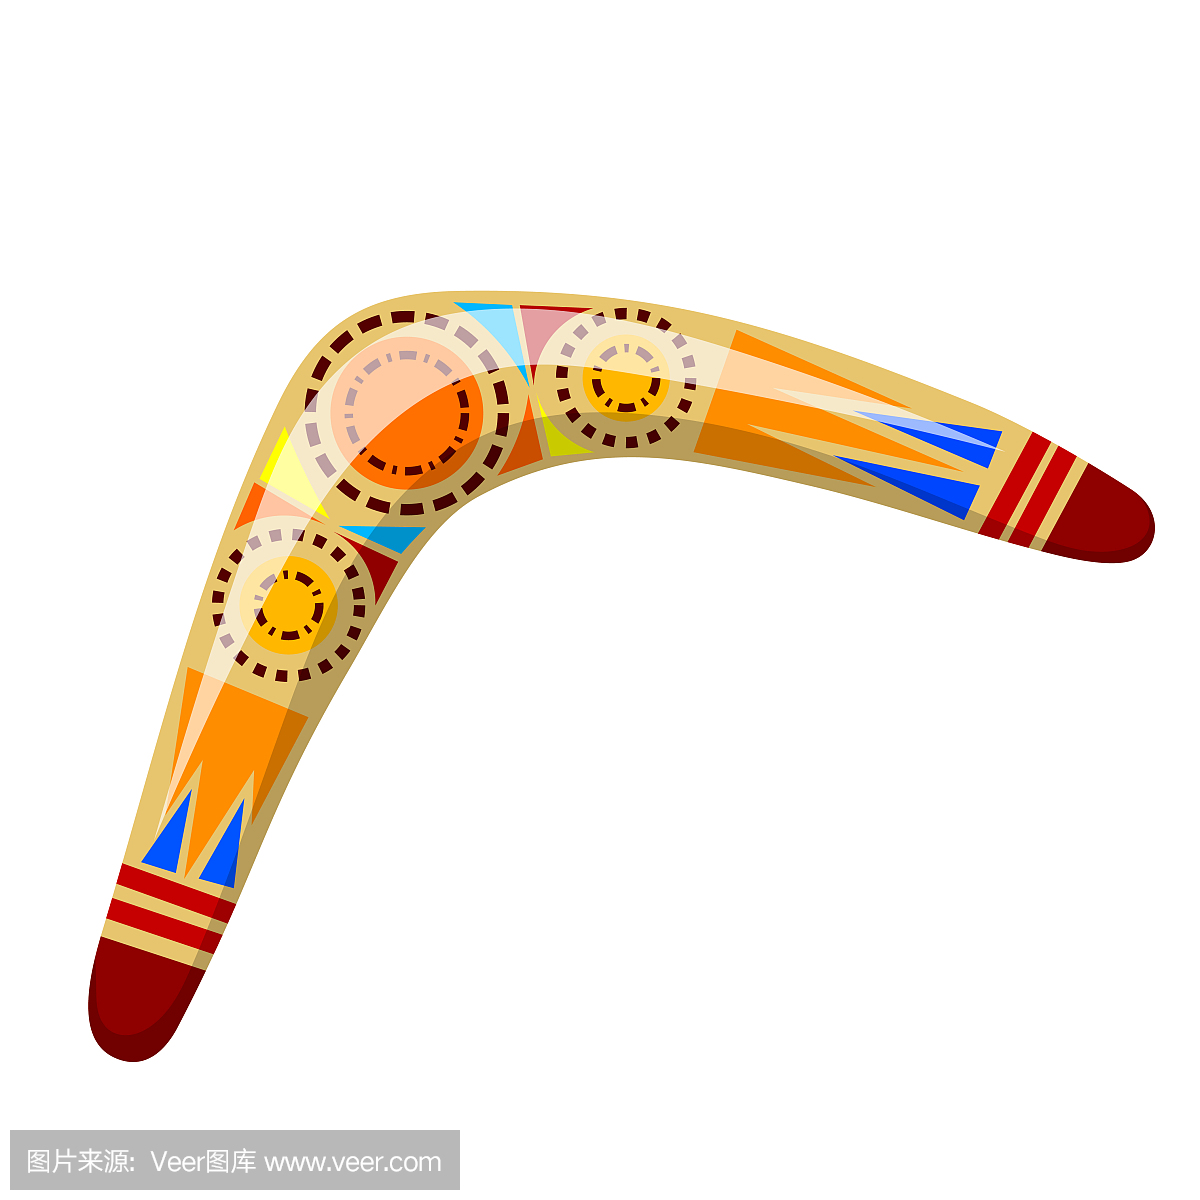 ctor illustration Australian wooden boomerang. 